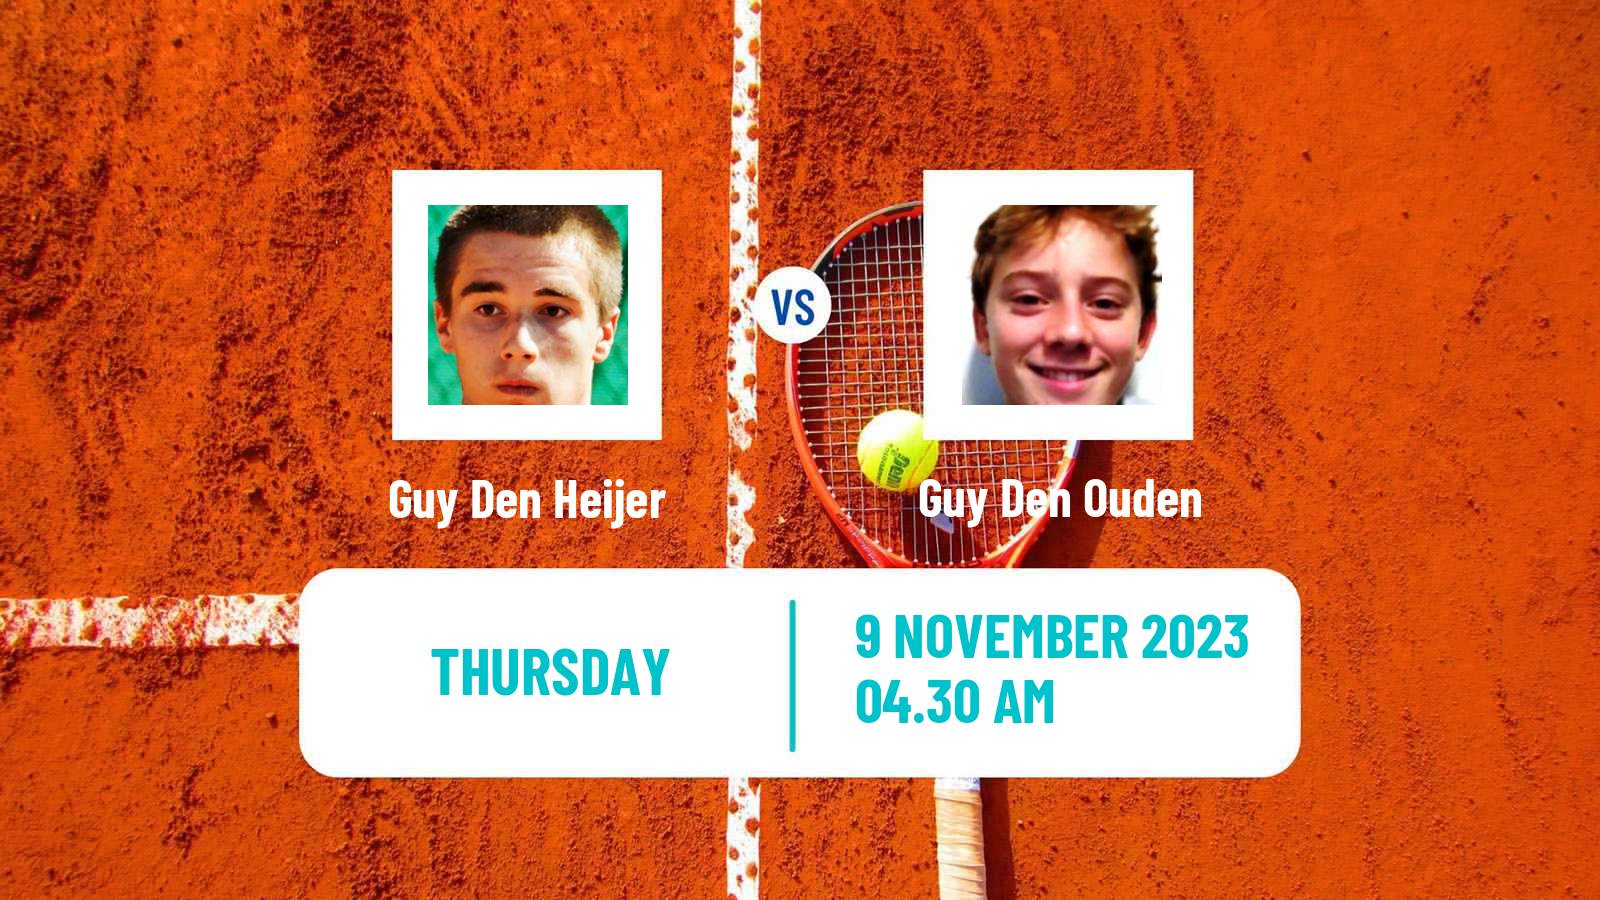 Tennis ITF M25 Heraklion 2 Men Guy Den Heijer - Guy Den Ouden